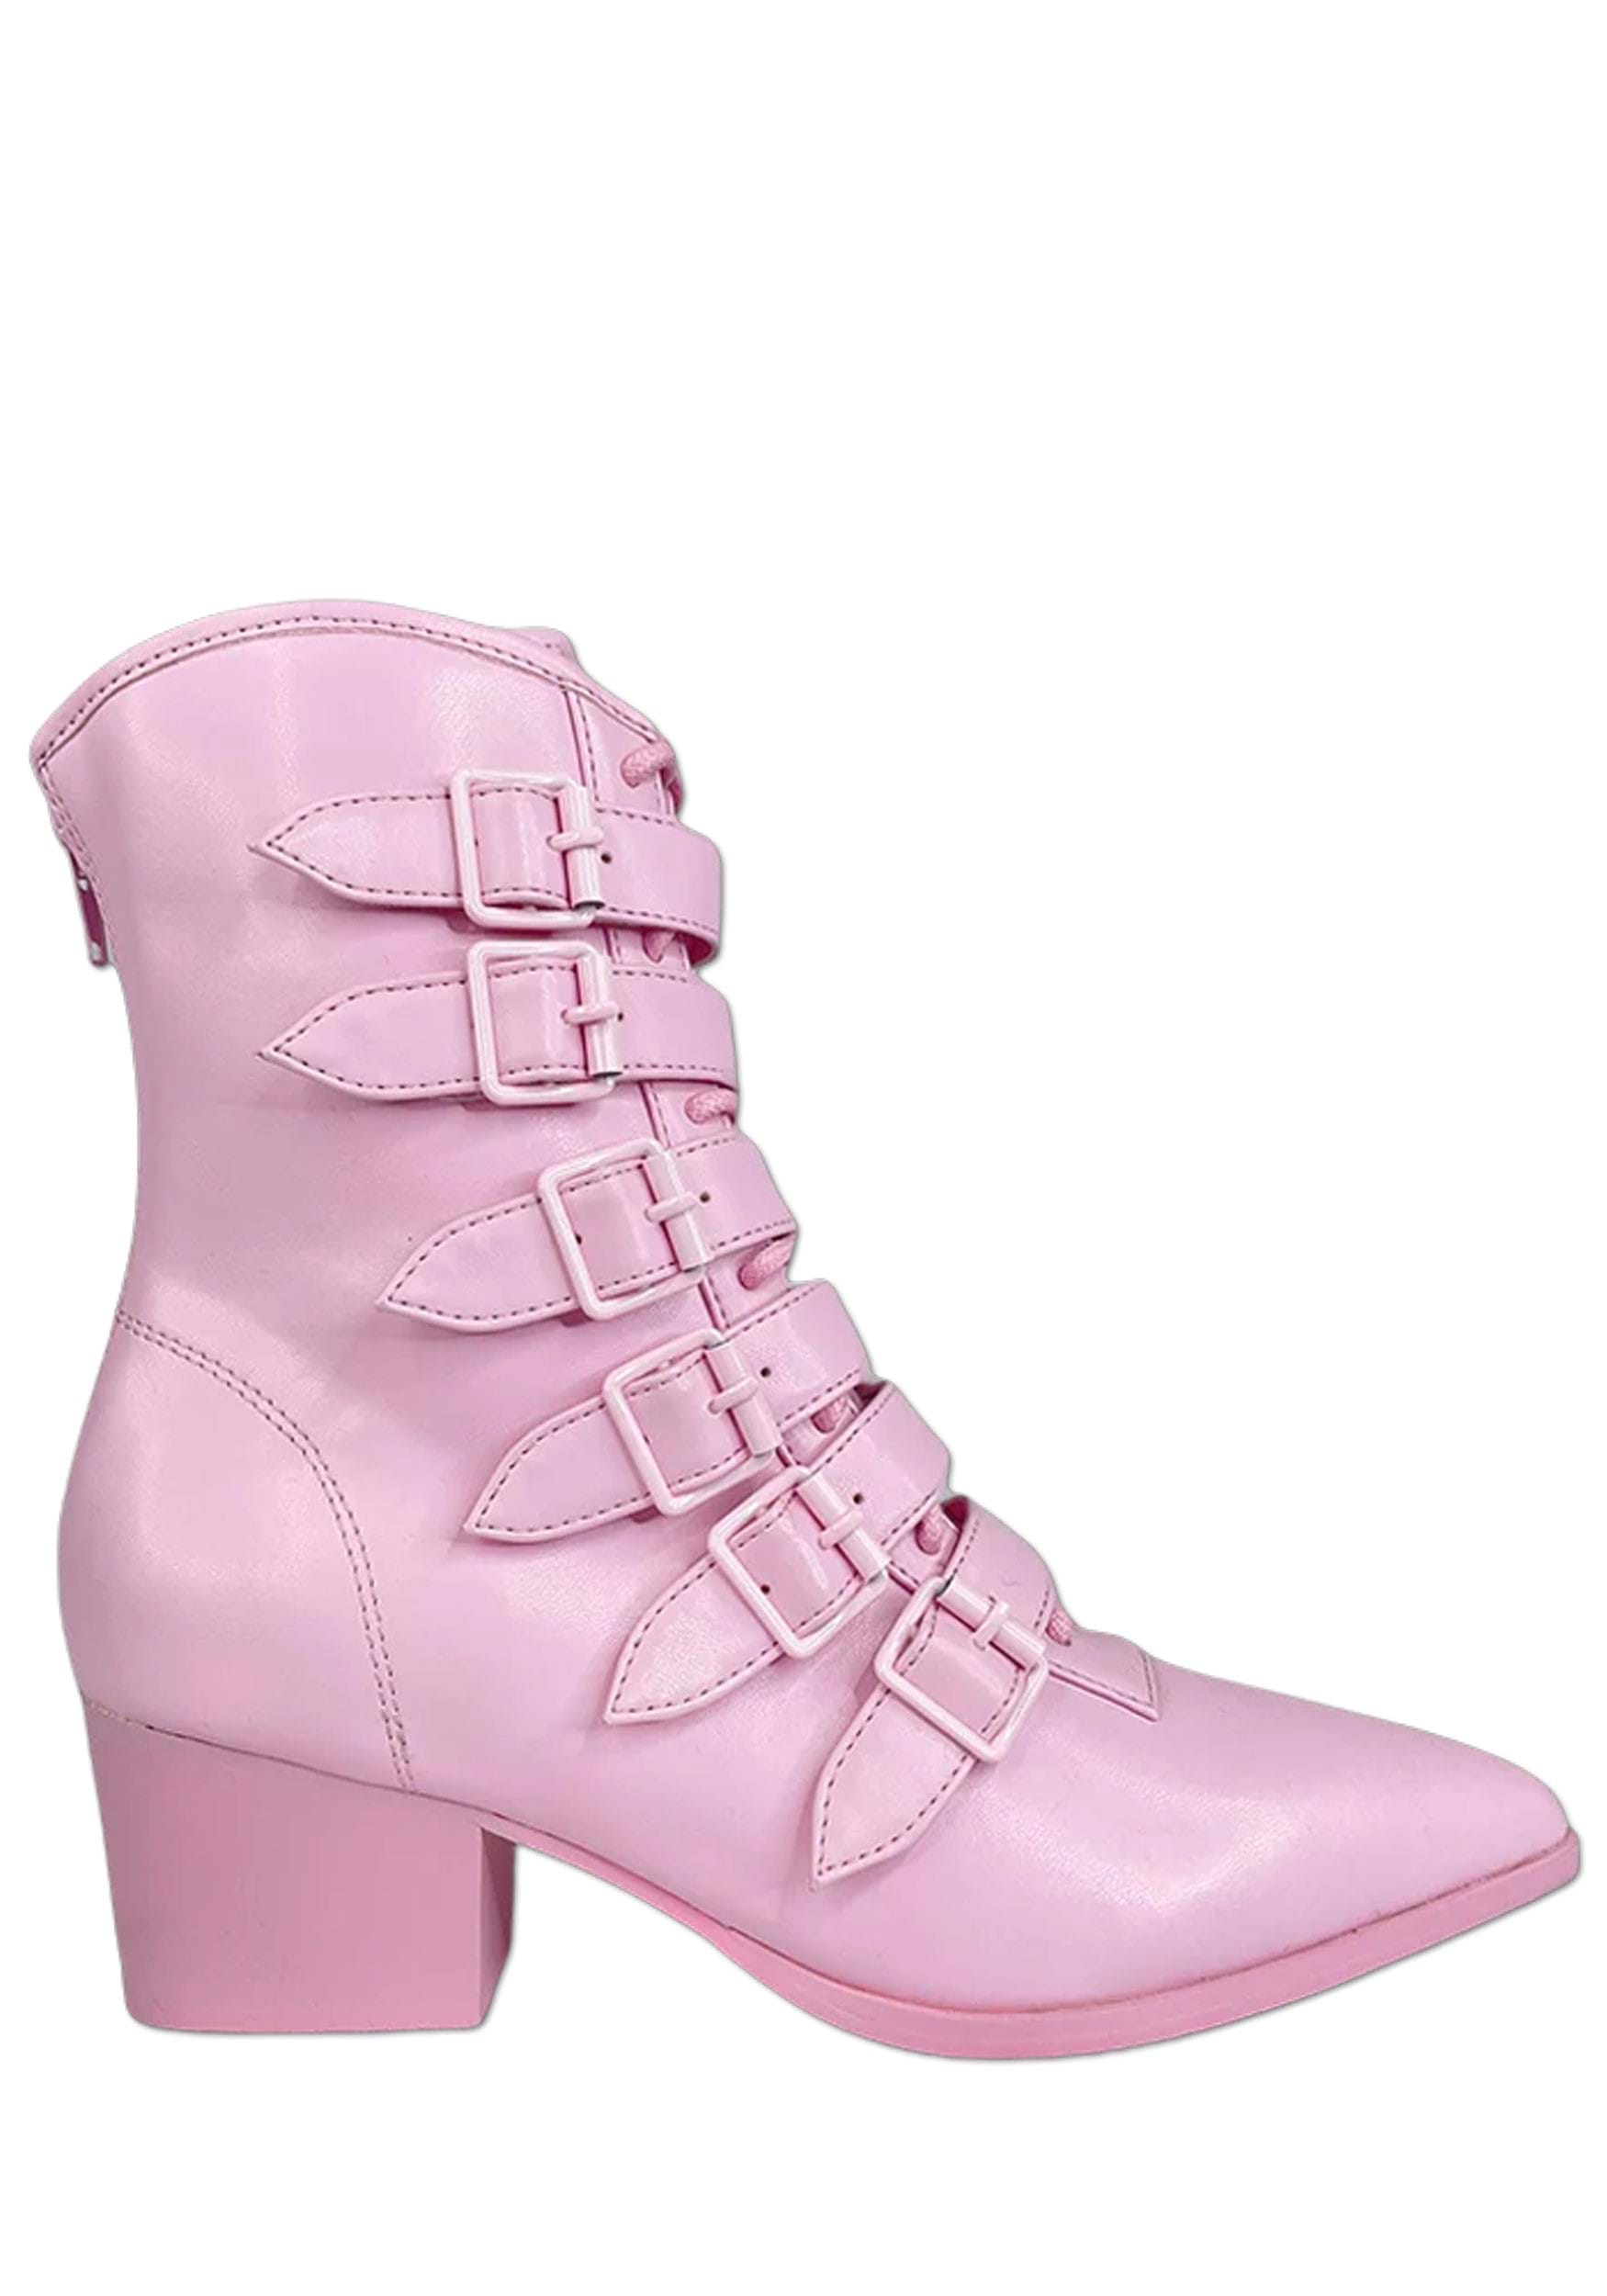 Women’s Pastel Pink Buckle Boots